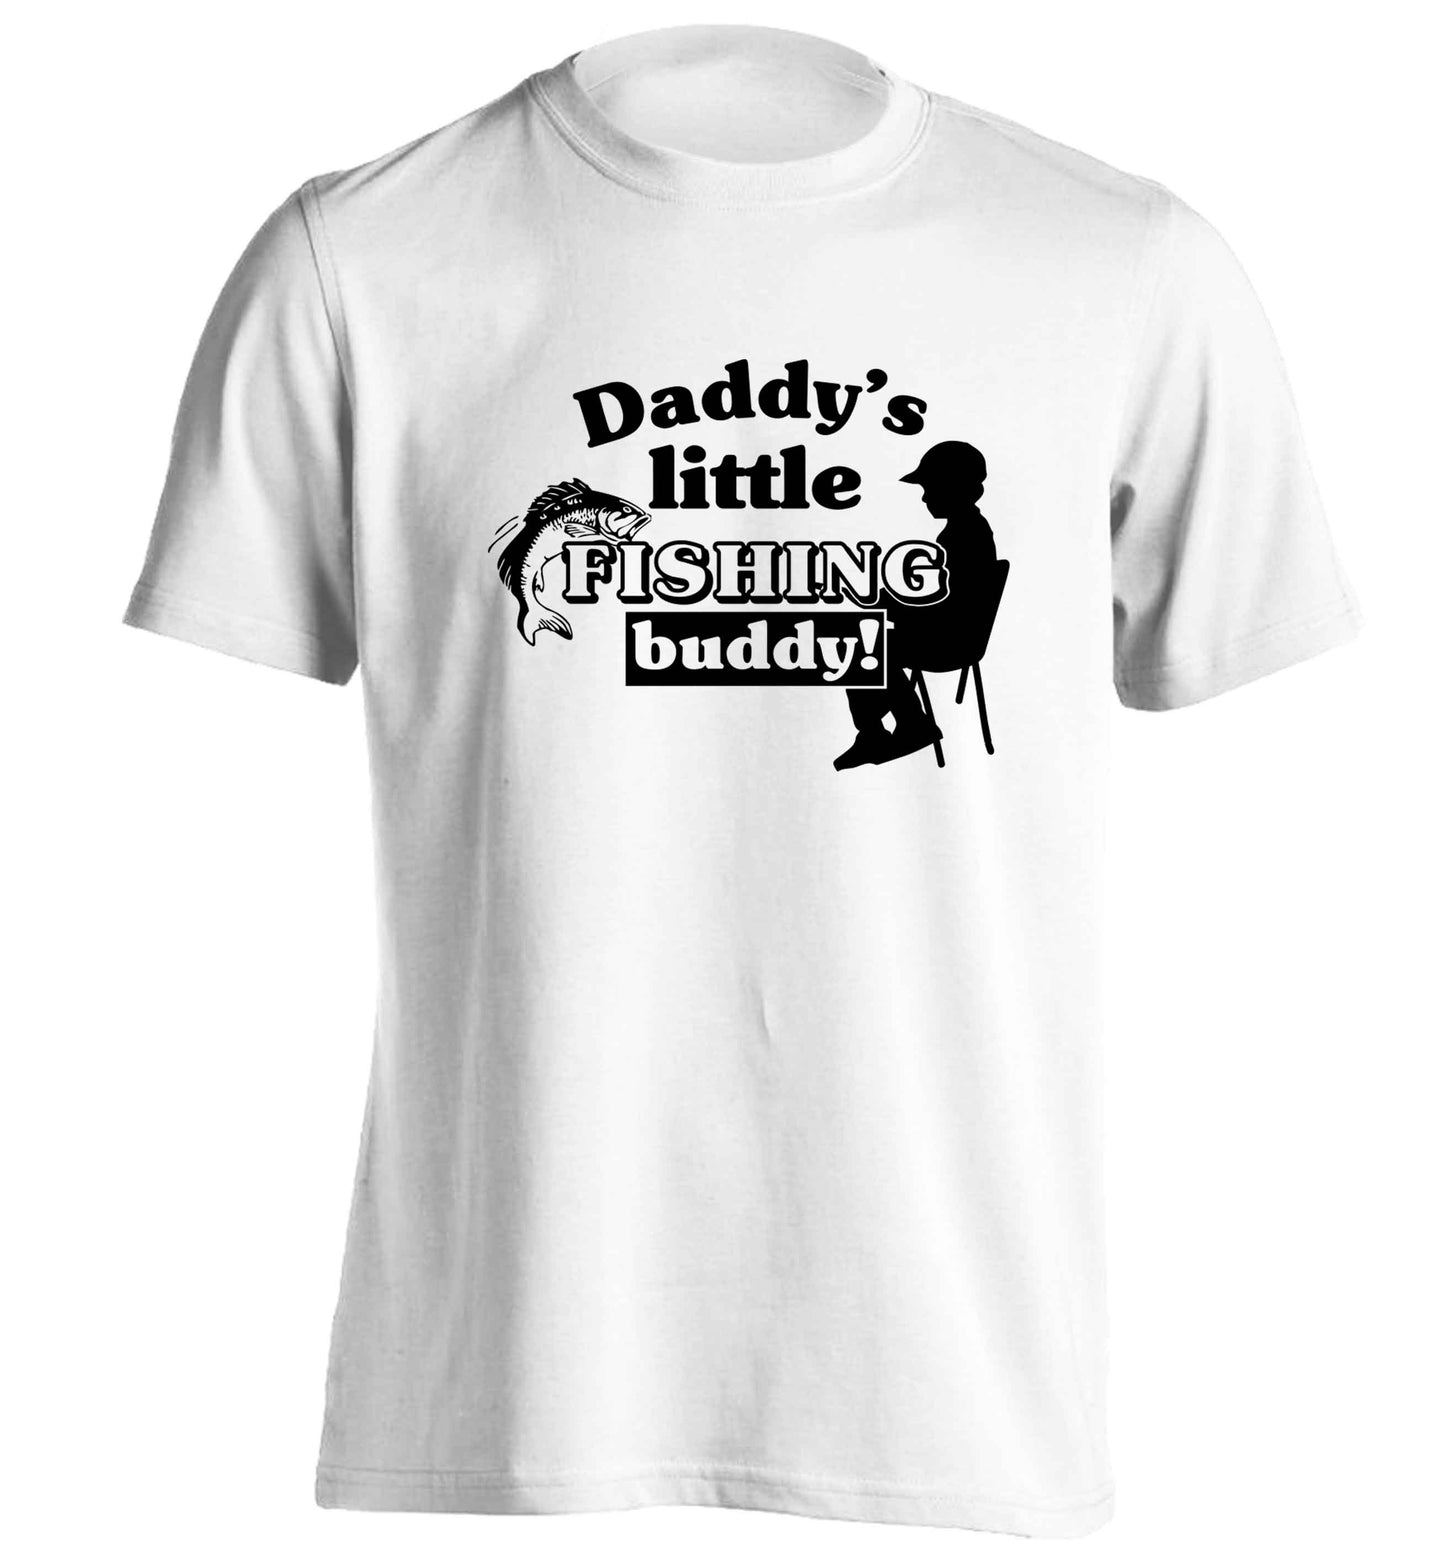 Daddy's little fishing buddy adults unisex white Tshirt 2XL